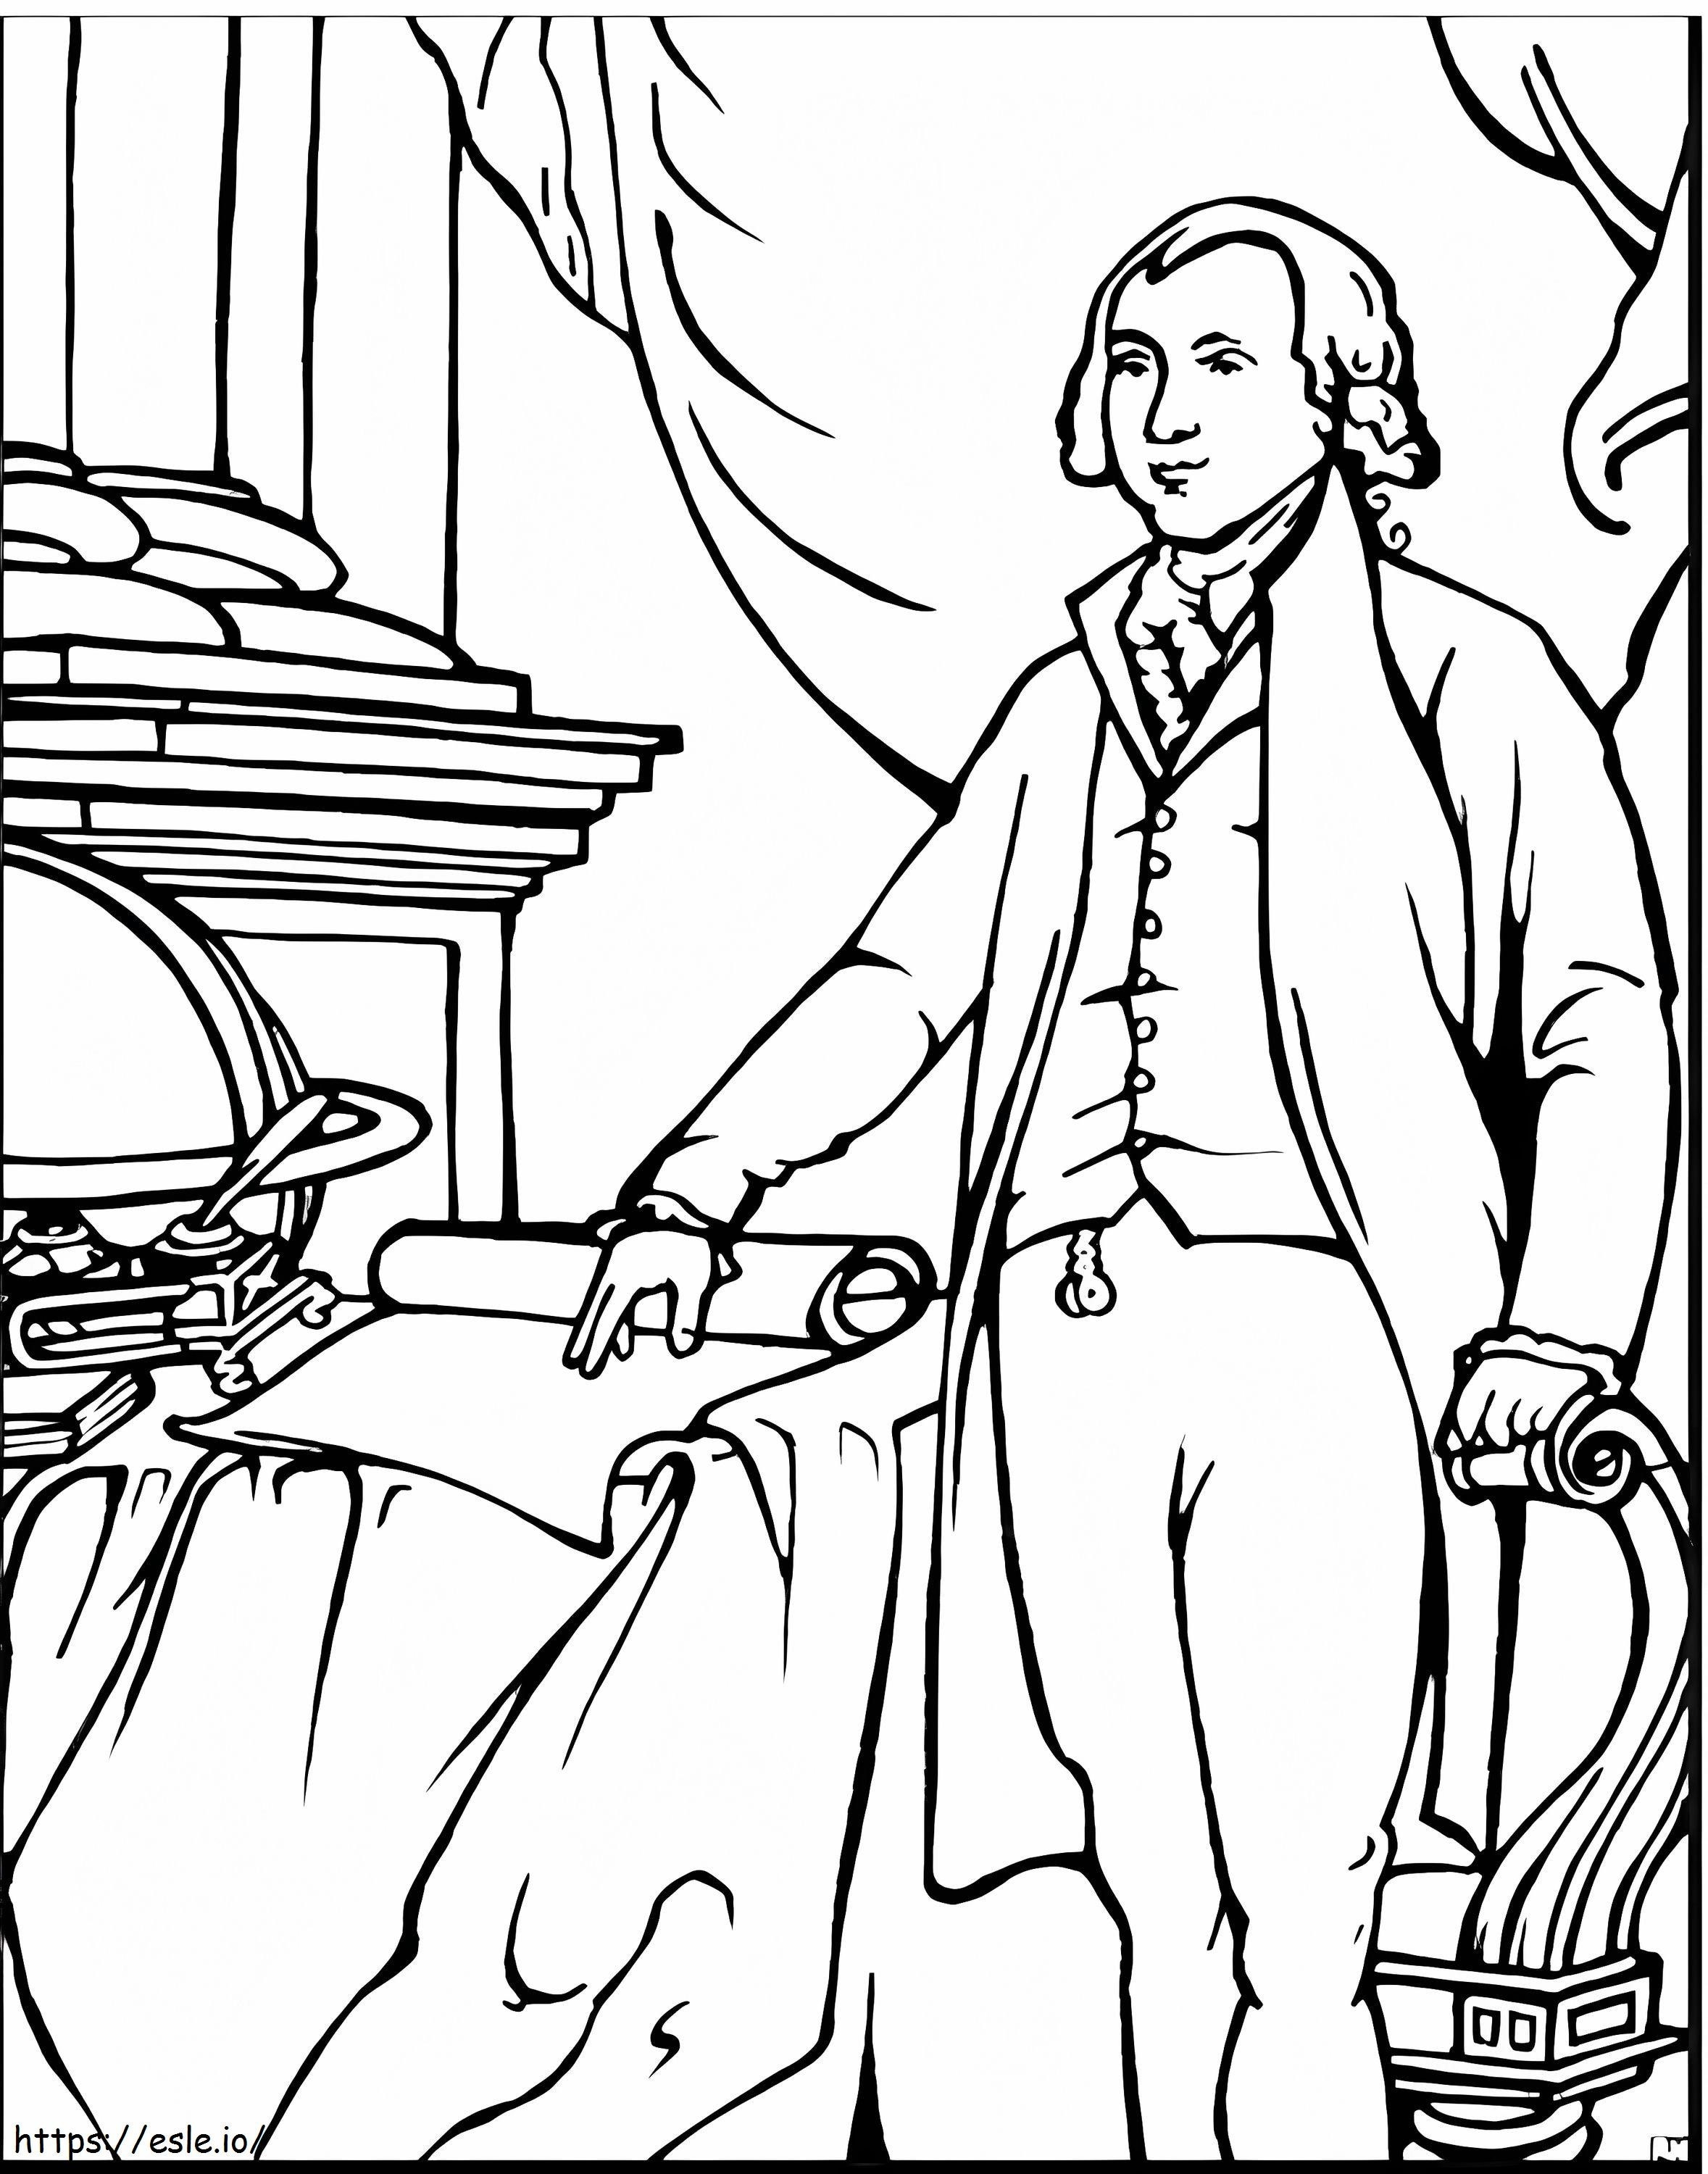 James Madison kleurplaat kleurplaat